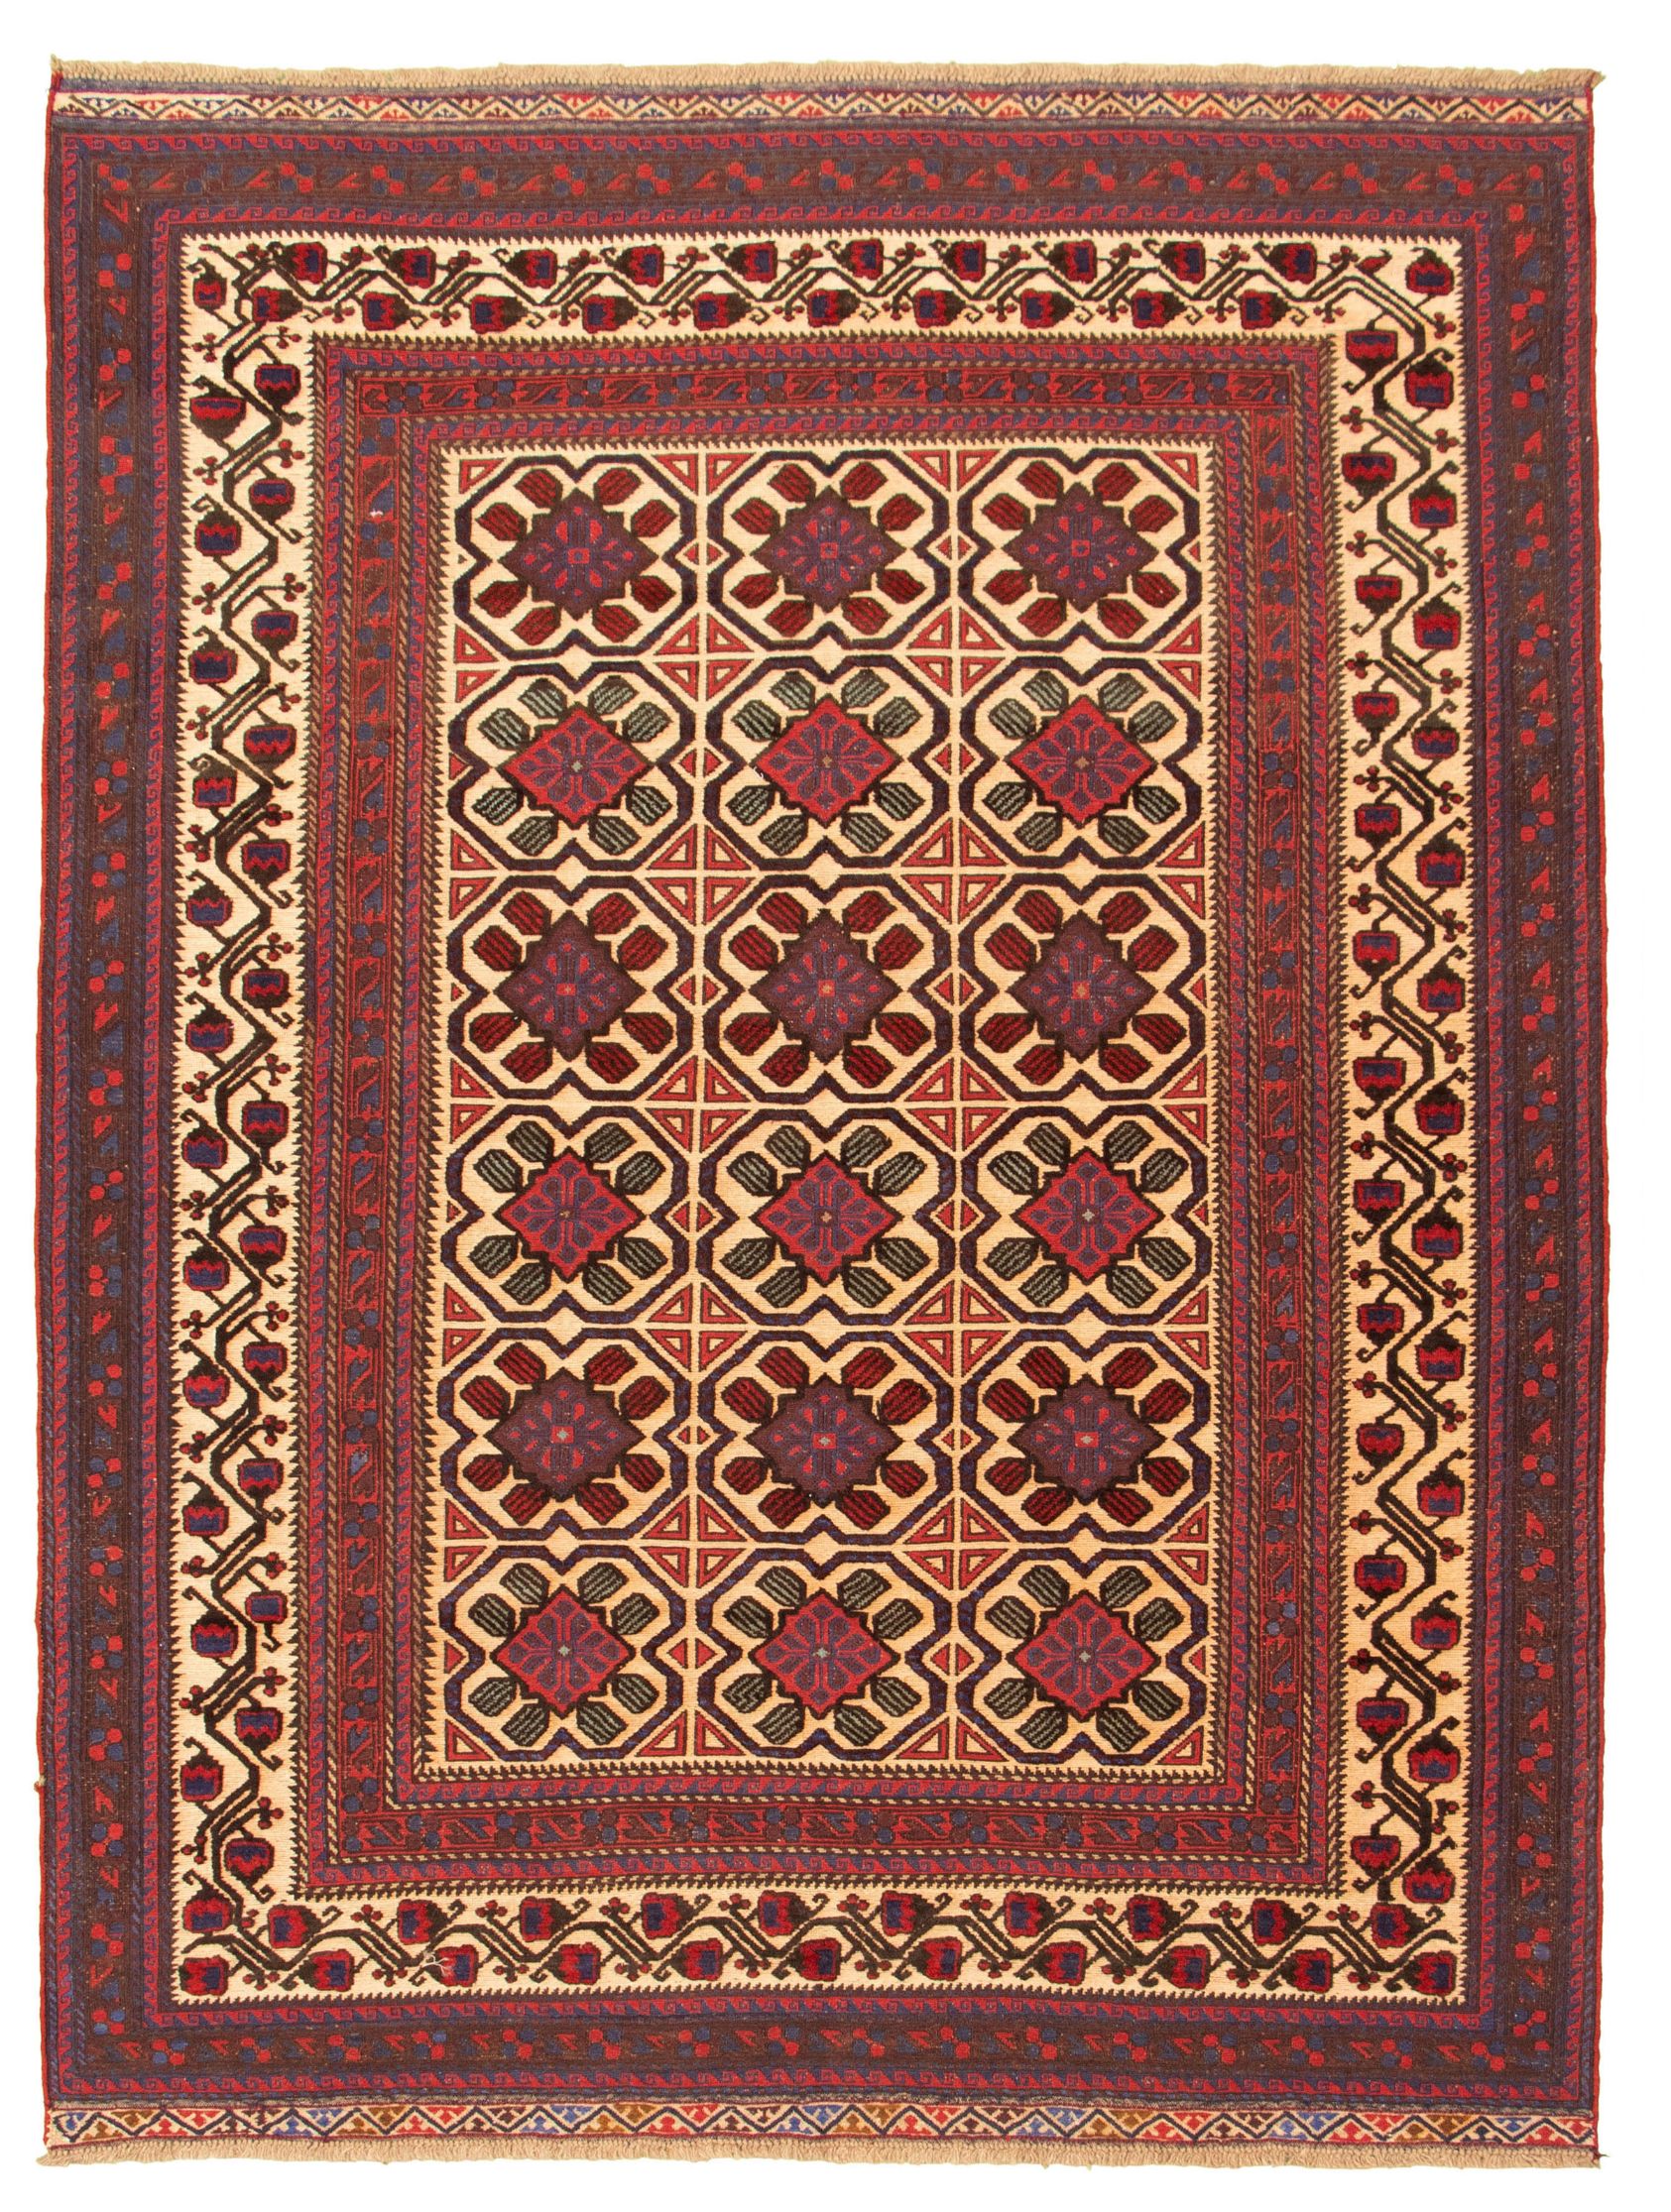 Hand-knotted Tajik Caucasian Red Wool Rug 6'10" x 9'1" Size: 6'10" x 9'1"  